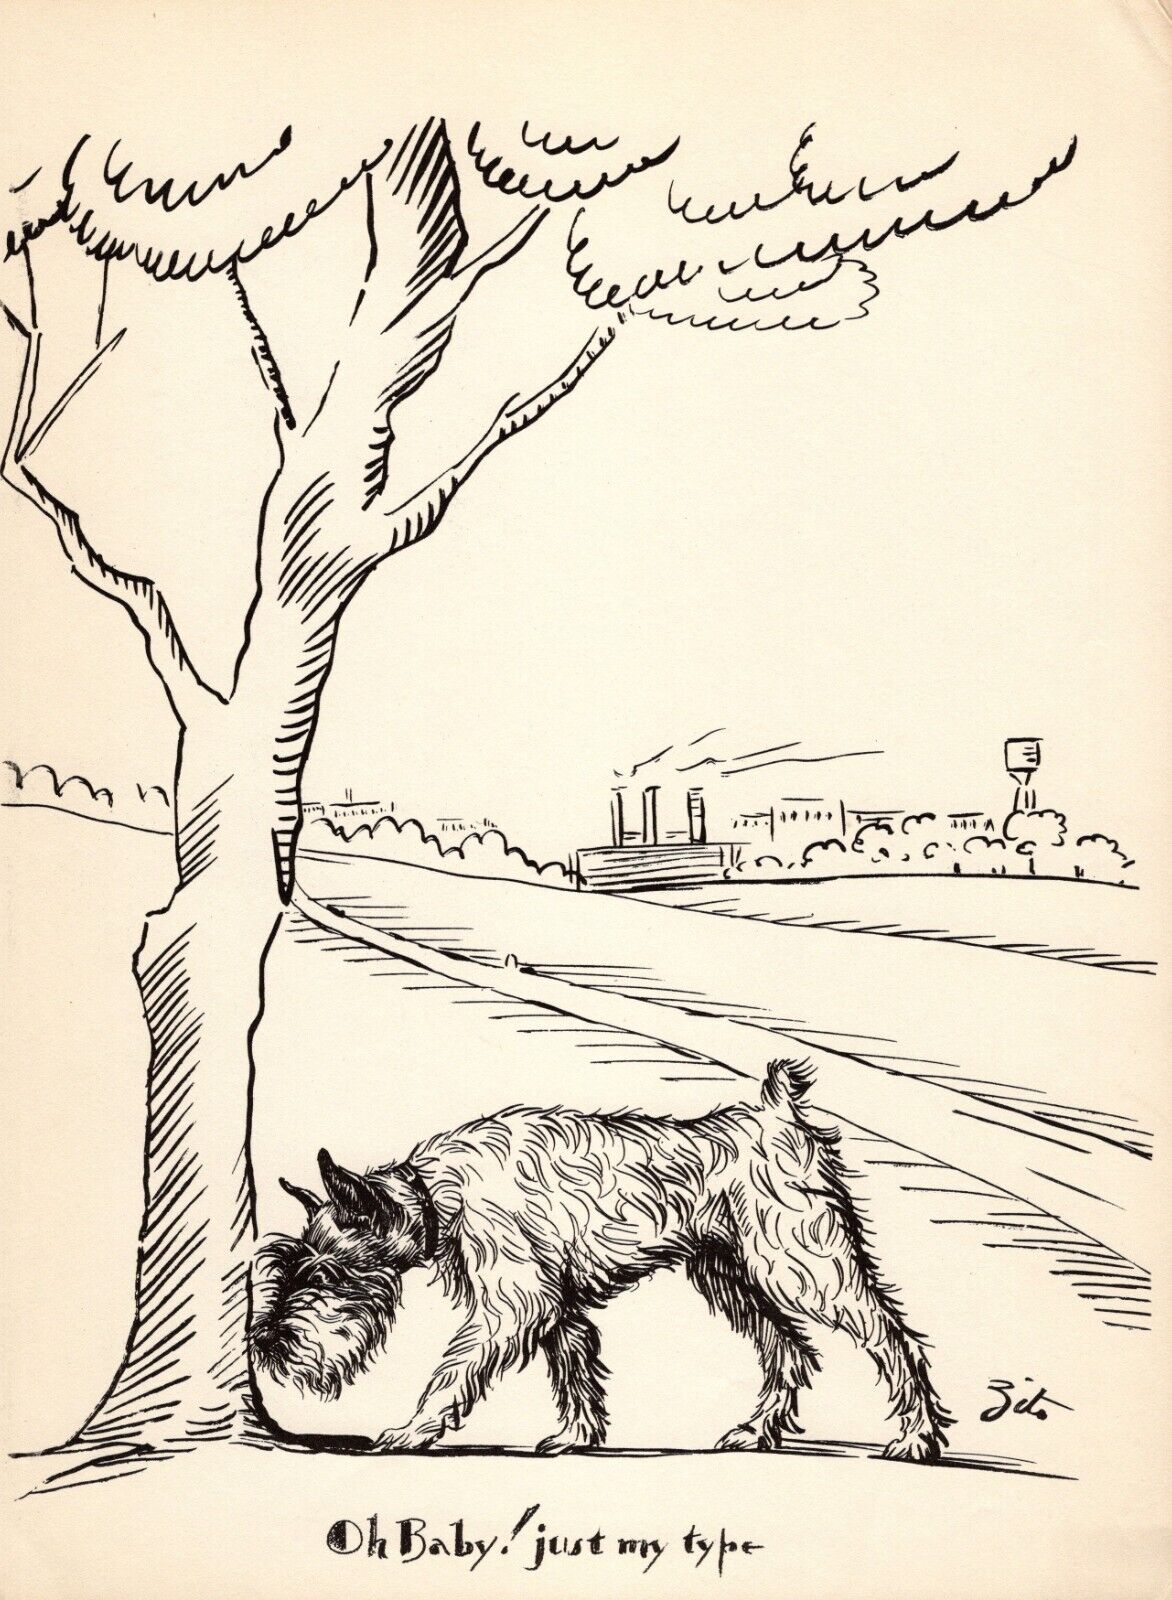 Antique Schnauzer Print 1930s Humorous Schnauzer Illustration Art by Zito 5280